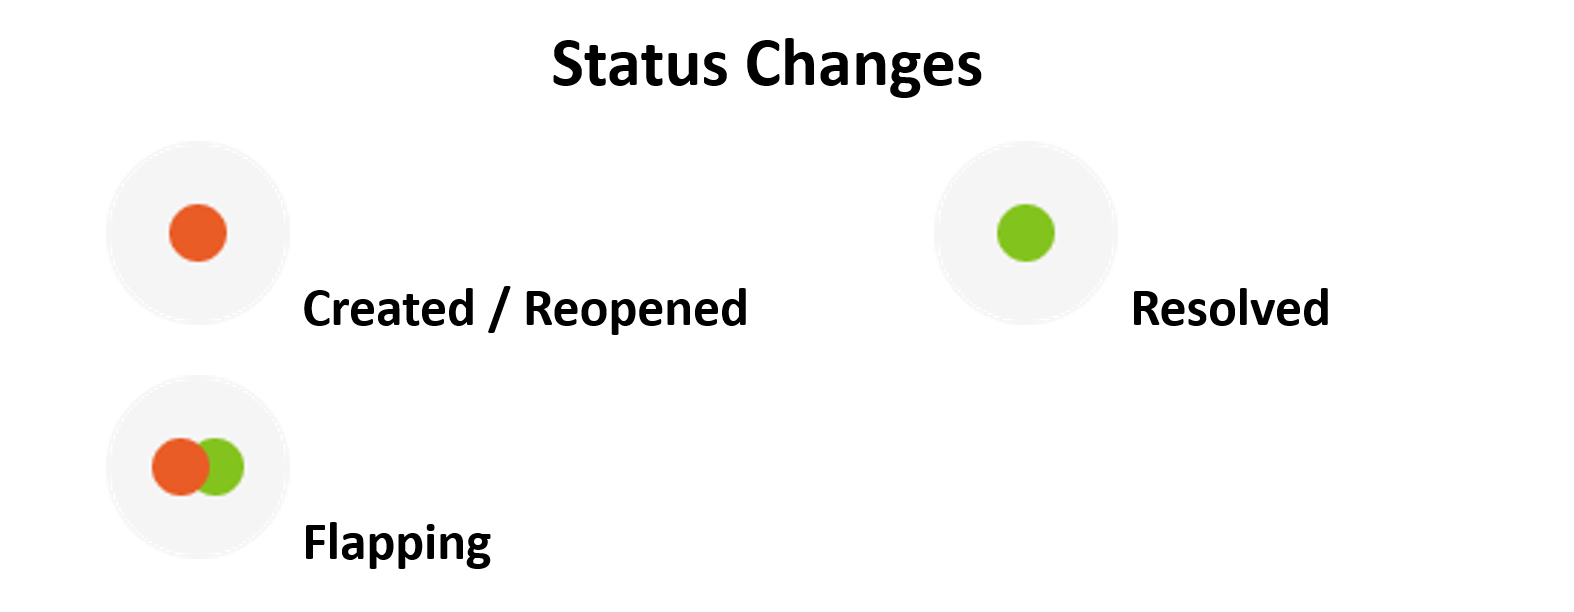 Status Change Icons